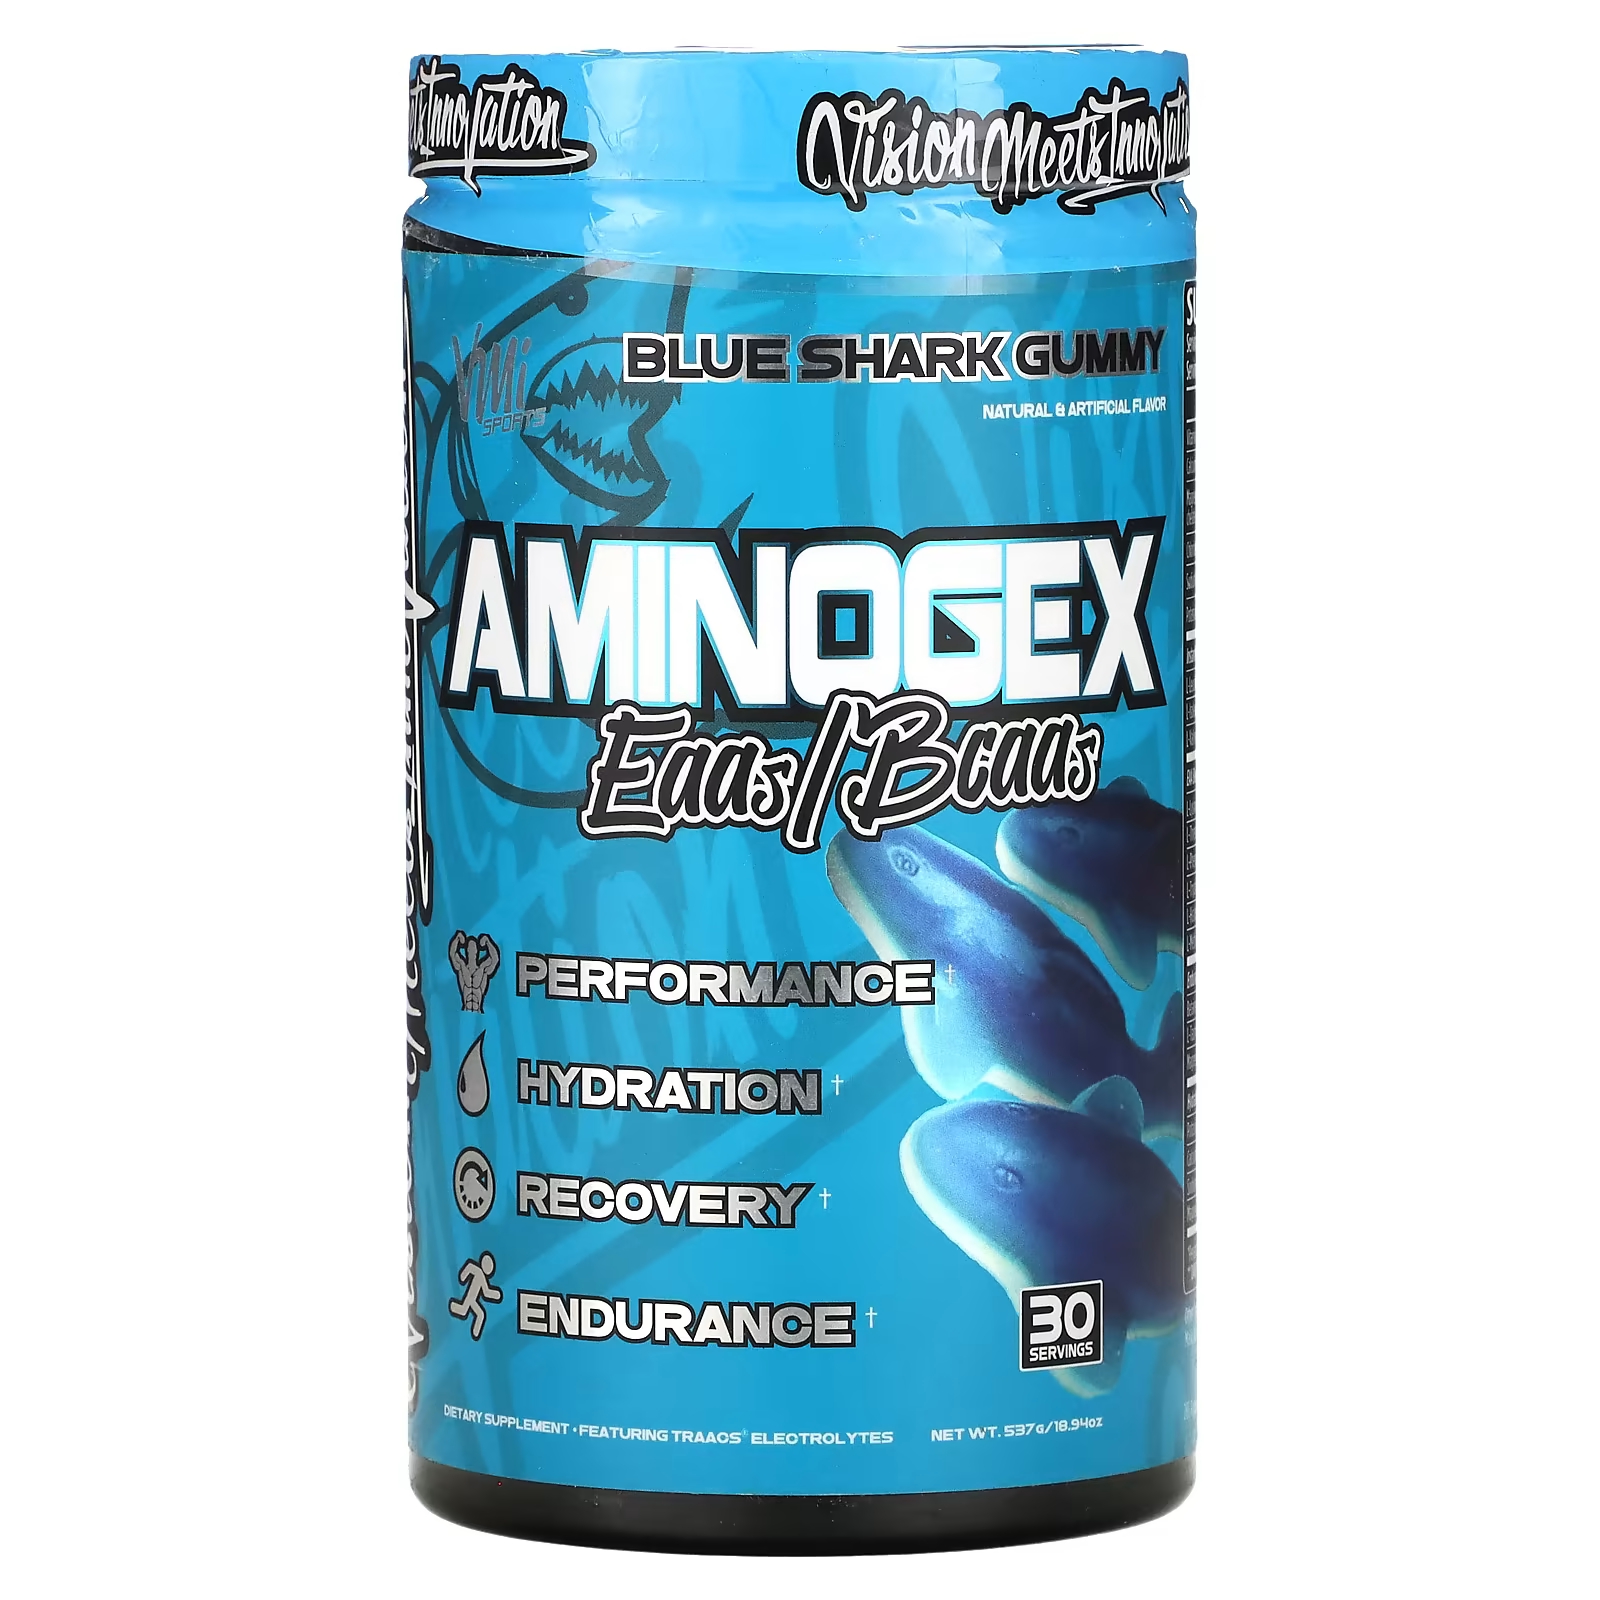 Пищевая добавка с электролитами VMI Sports Aminogex EAA/BCAA Gummy Blue Shark Gummy, 537 г